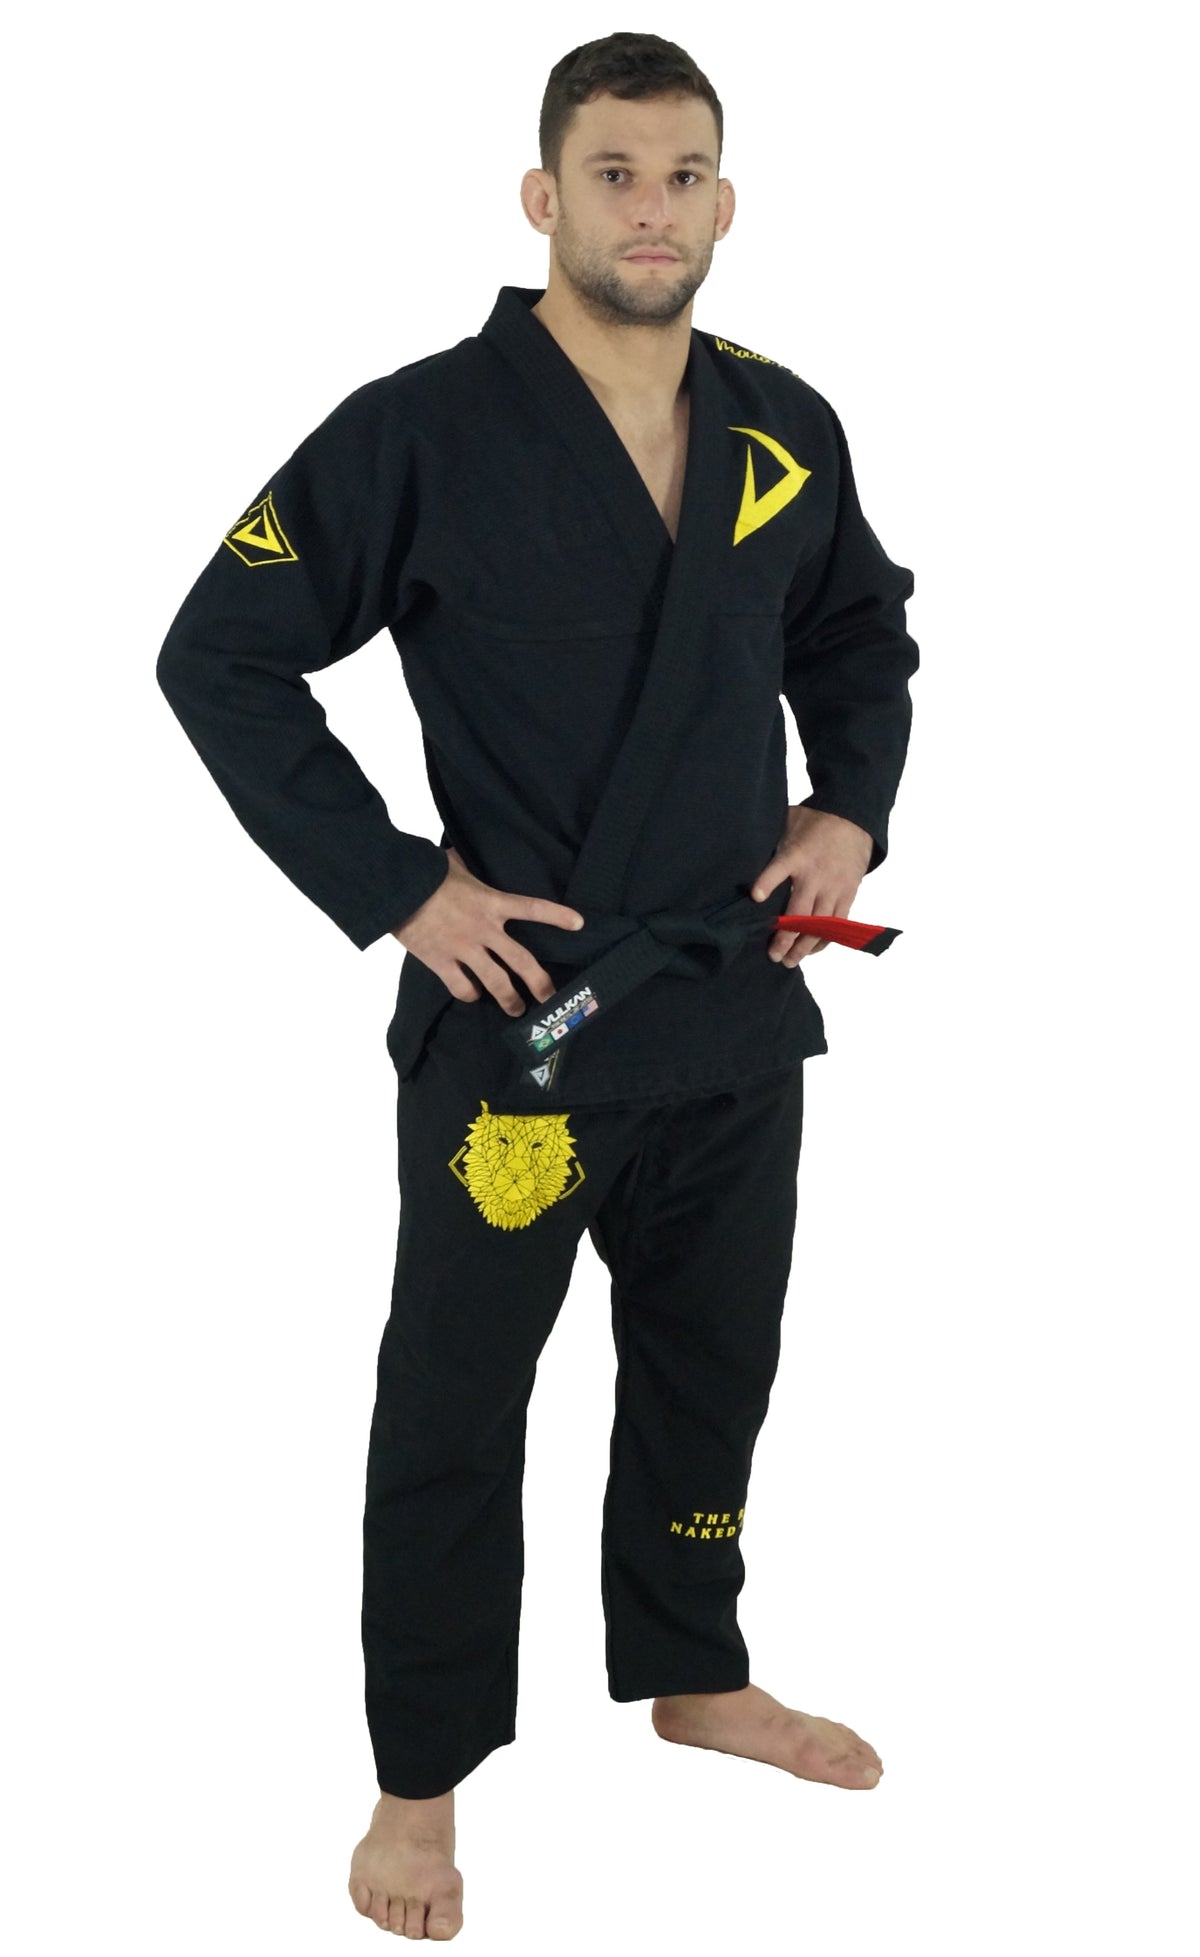 PRO MATA LEAO Limited Edition Jiu Jitsu Gi (Black)